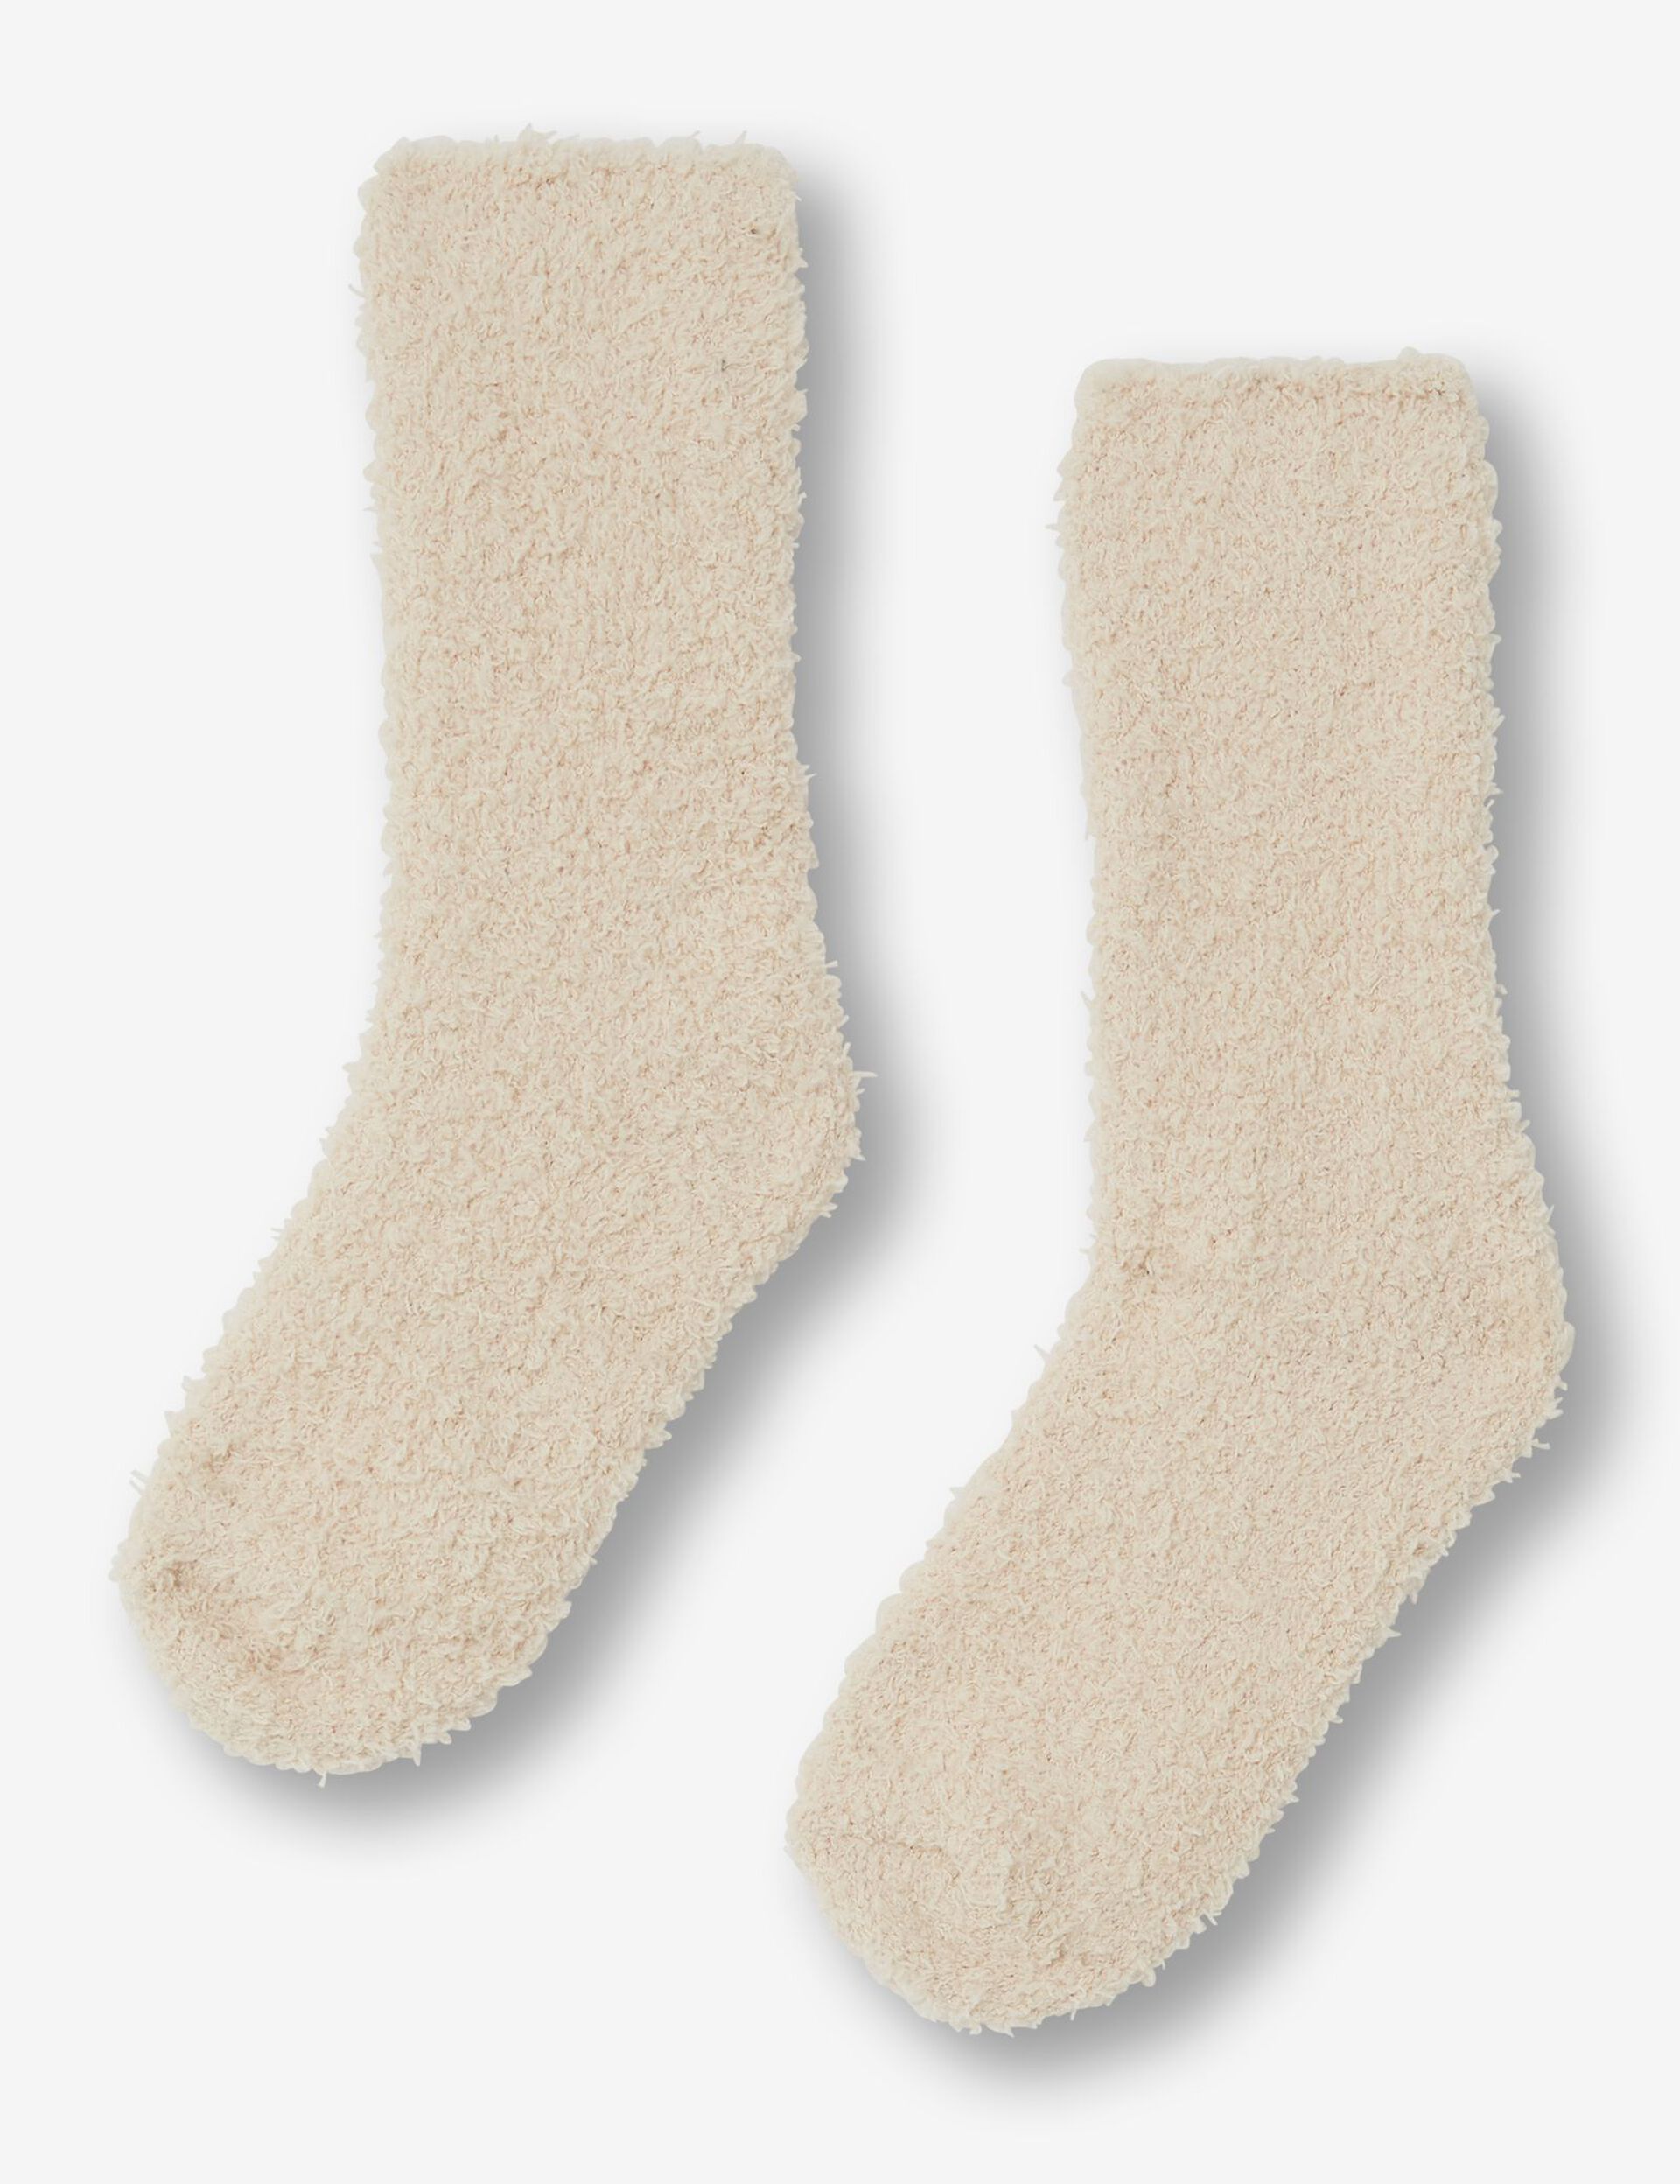 Fluffy socks